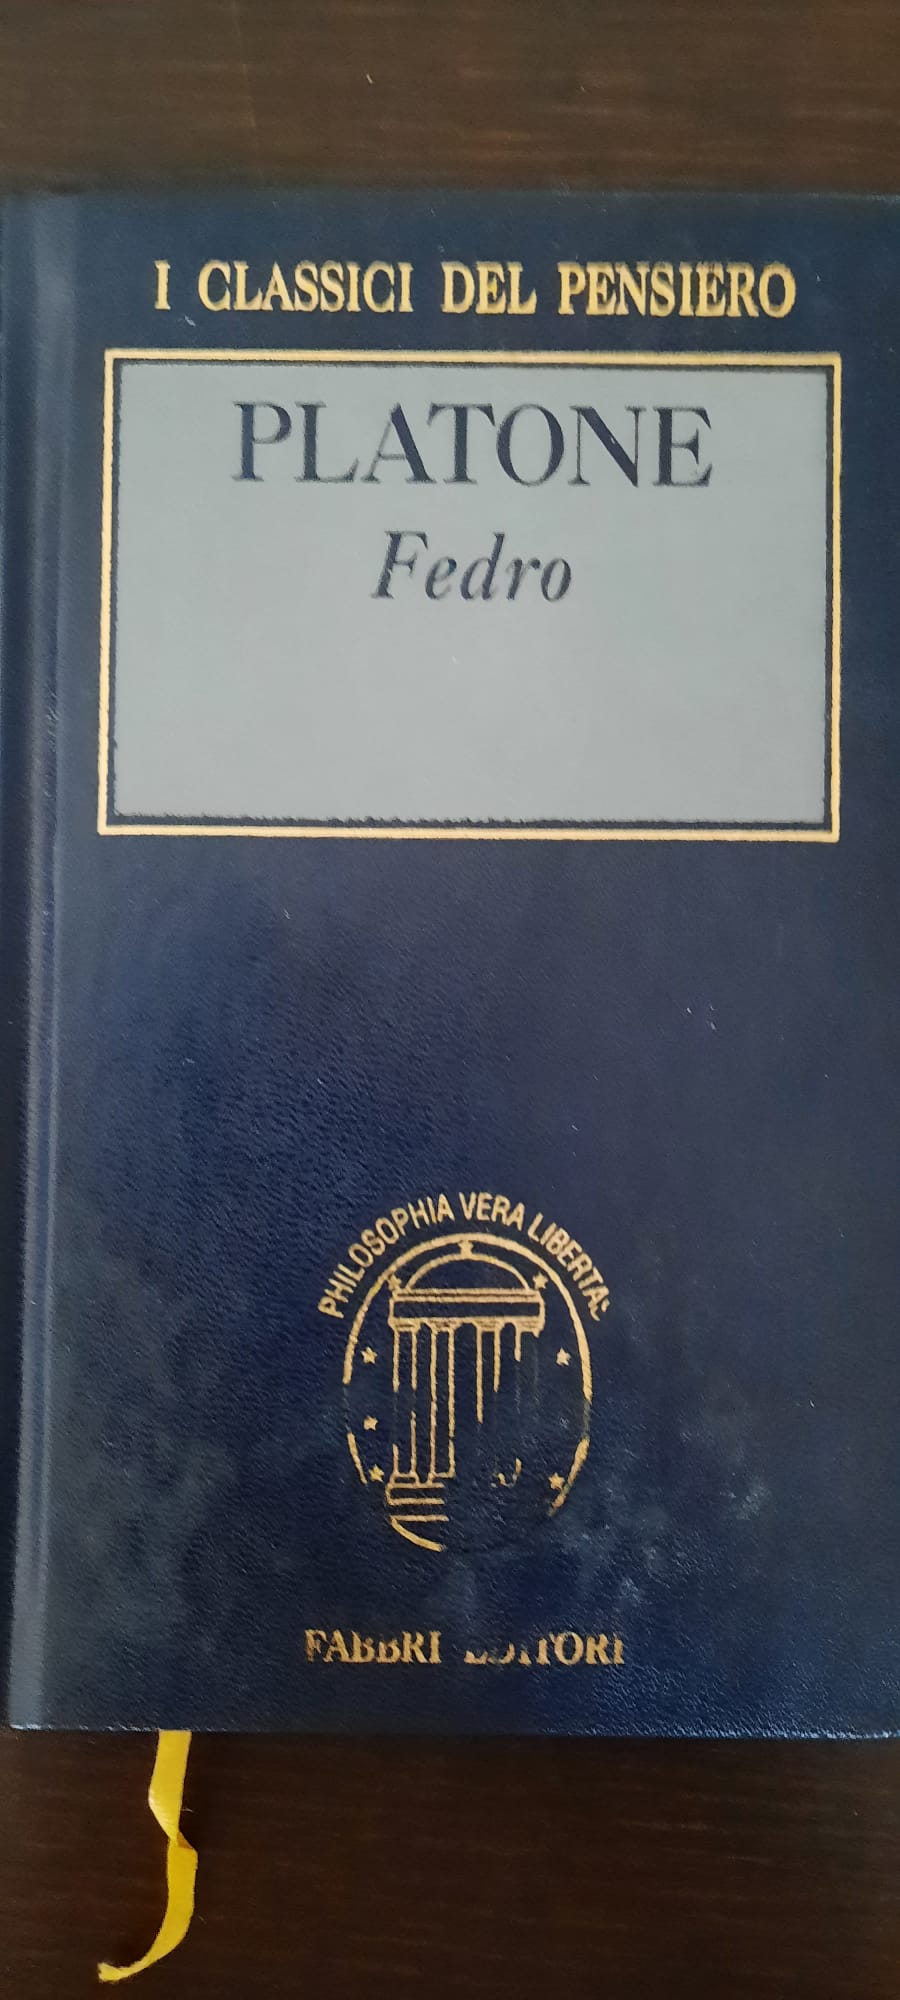 Platone, Fedro